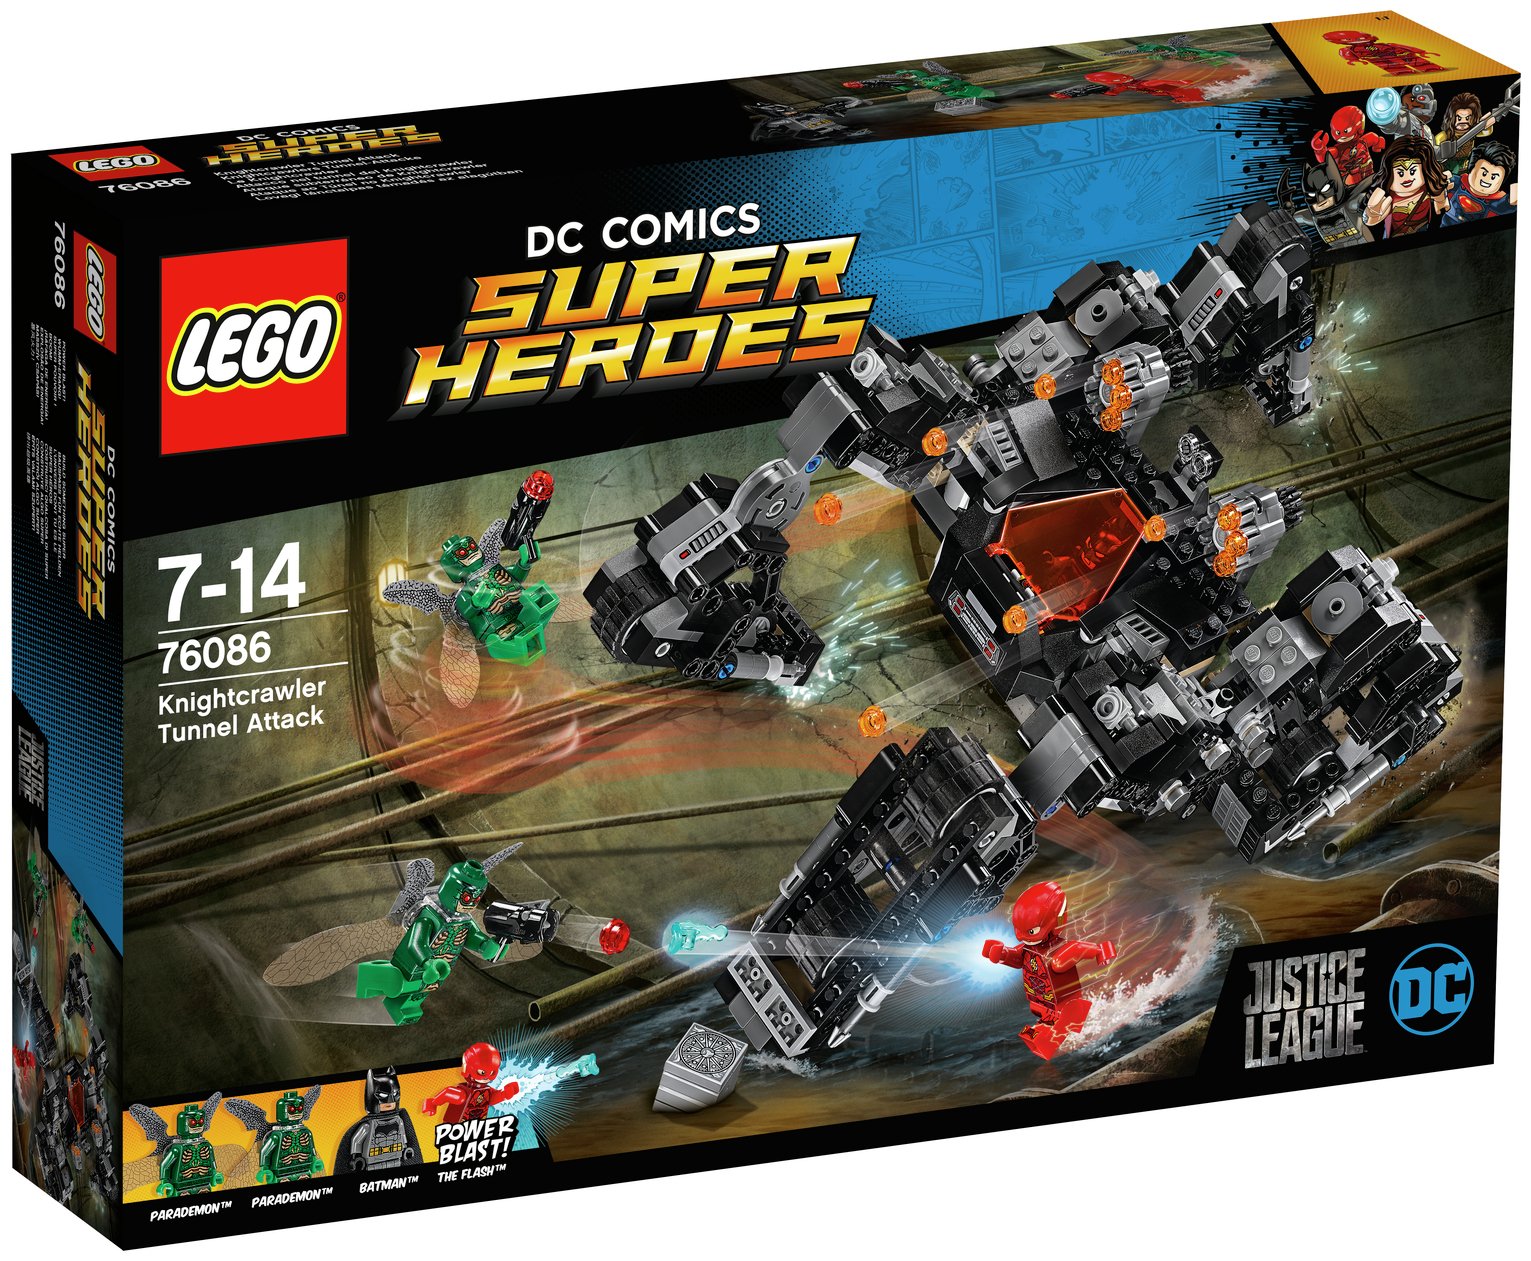 LEGO DC Super Heroes Knightcrawler Tunnel Attack - 76086